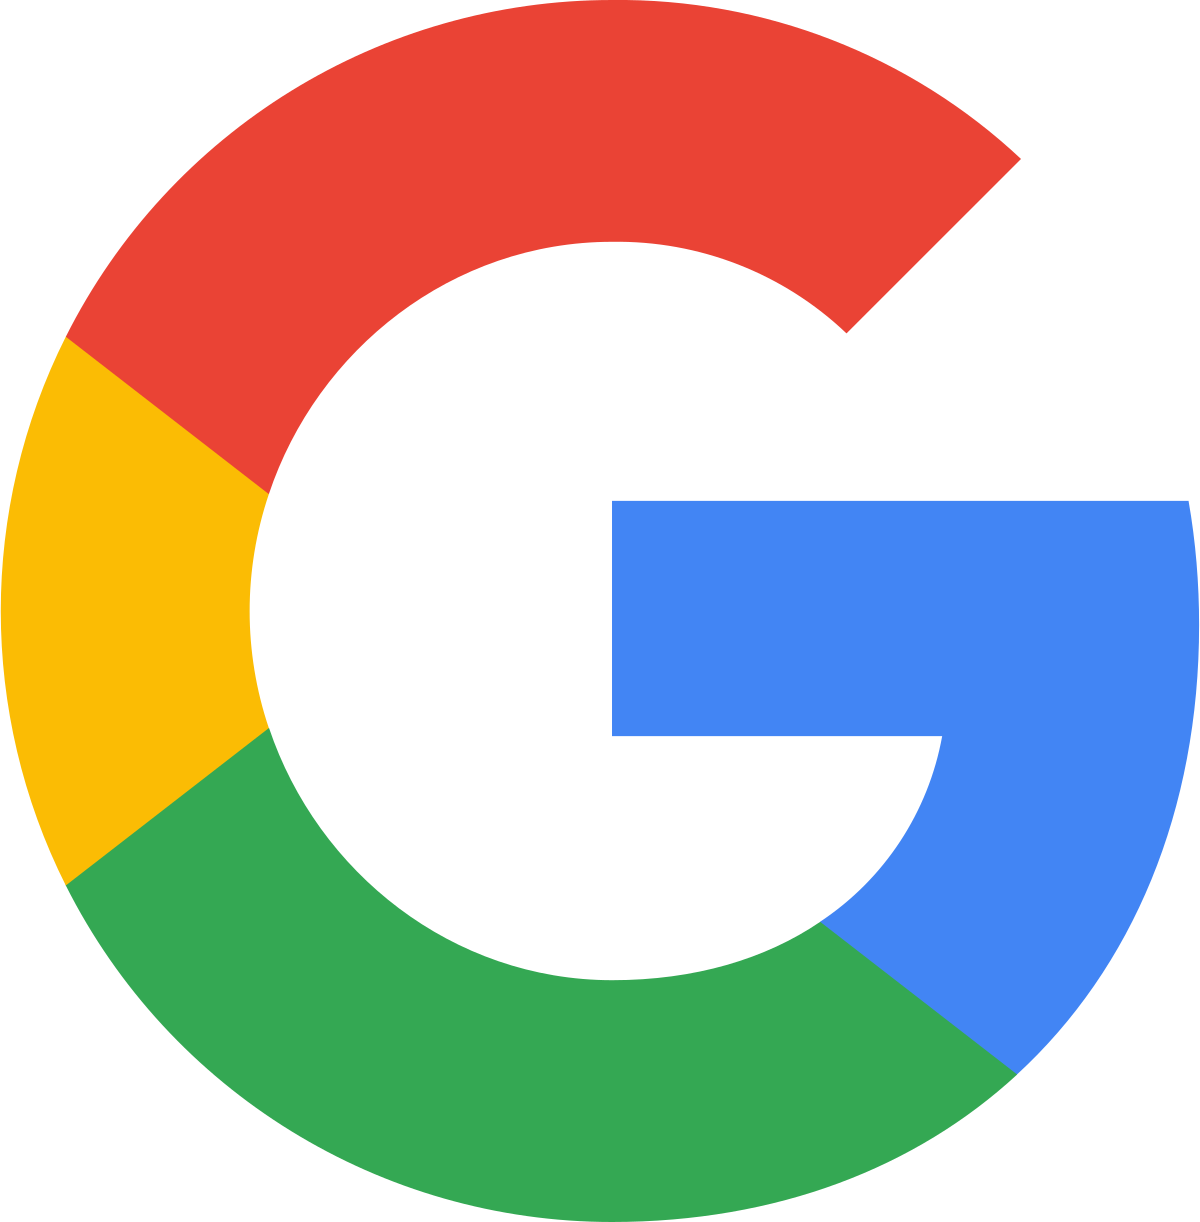 icon-google